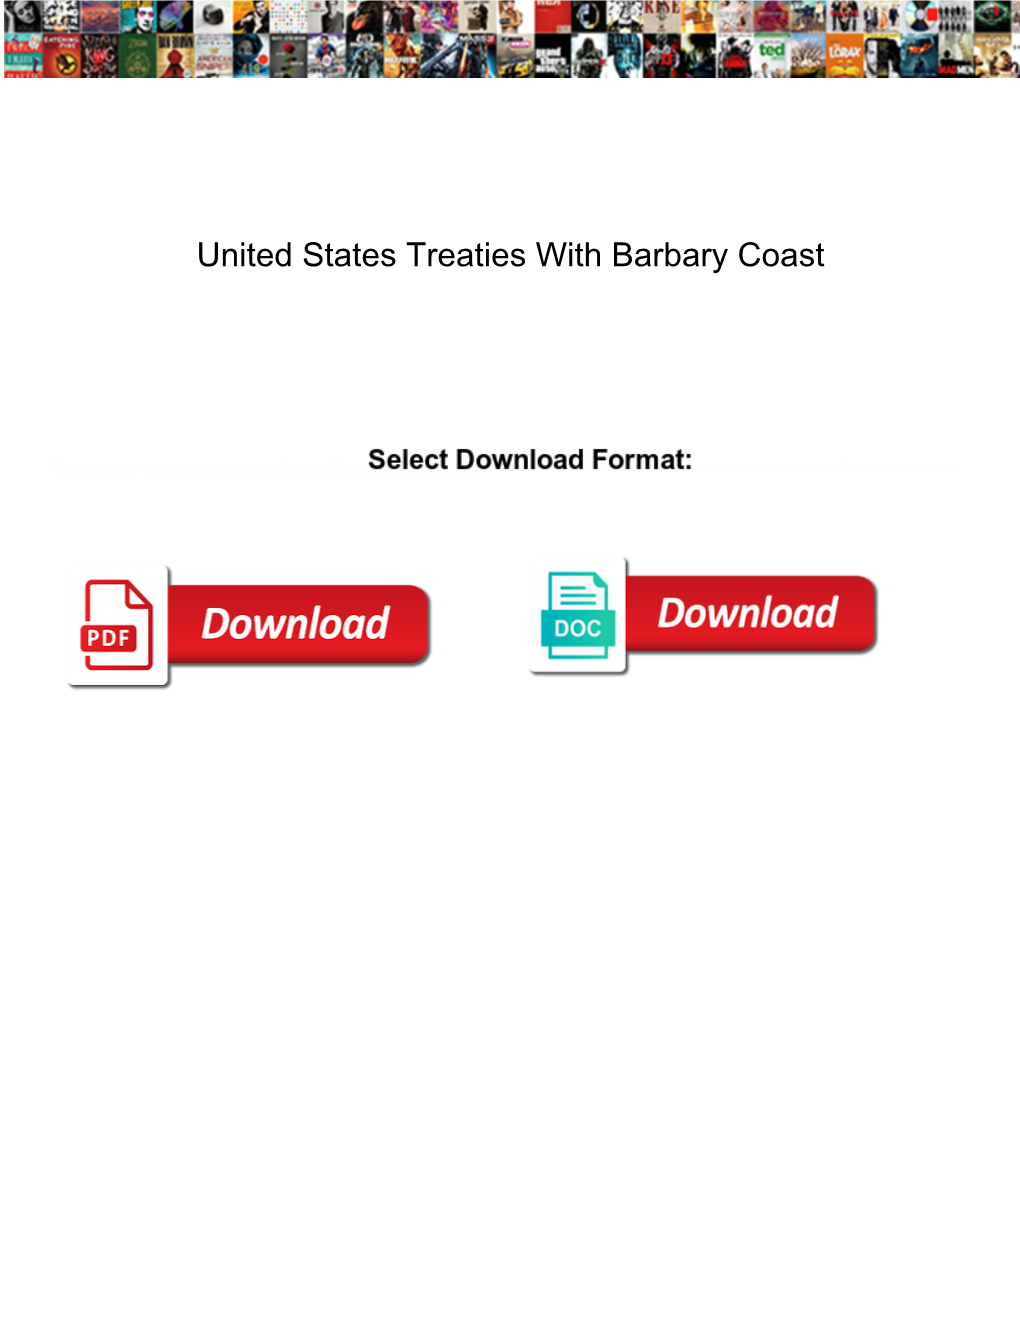 United States Treaties with Barbary Coast